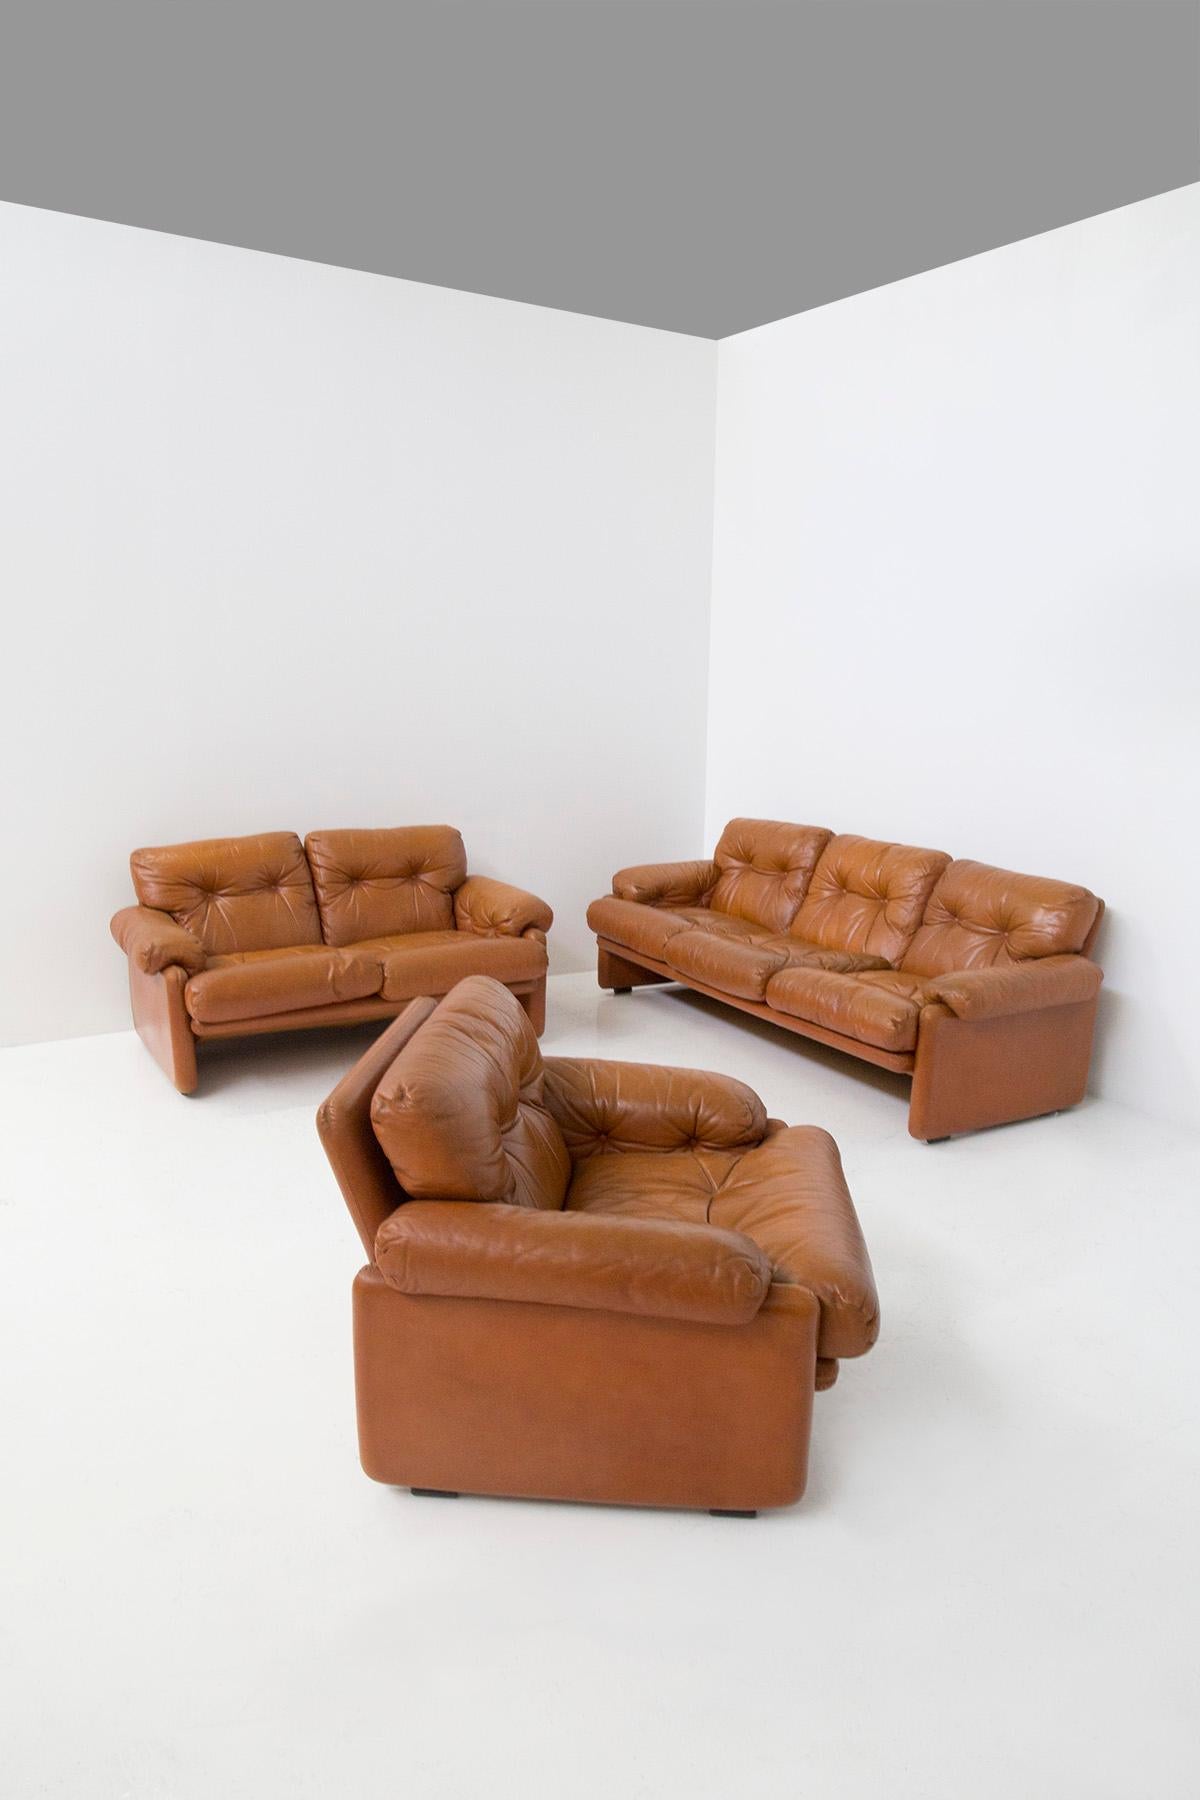 Modern Living room of Afra and Tobia Scarpa, Model Coronado for B&B Italia